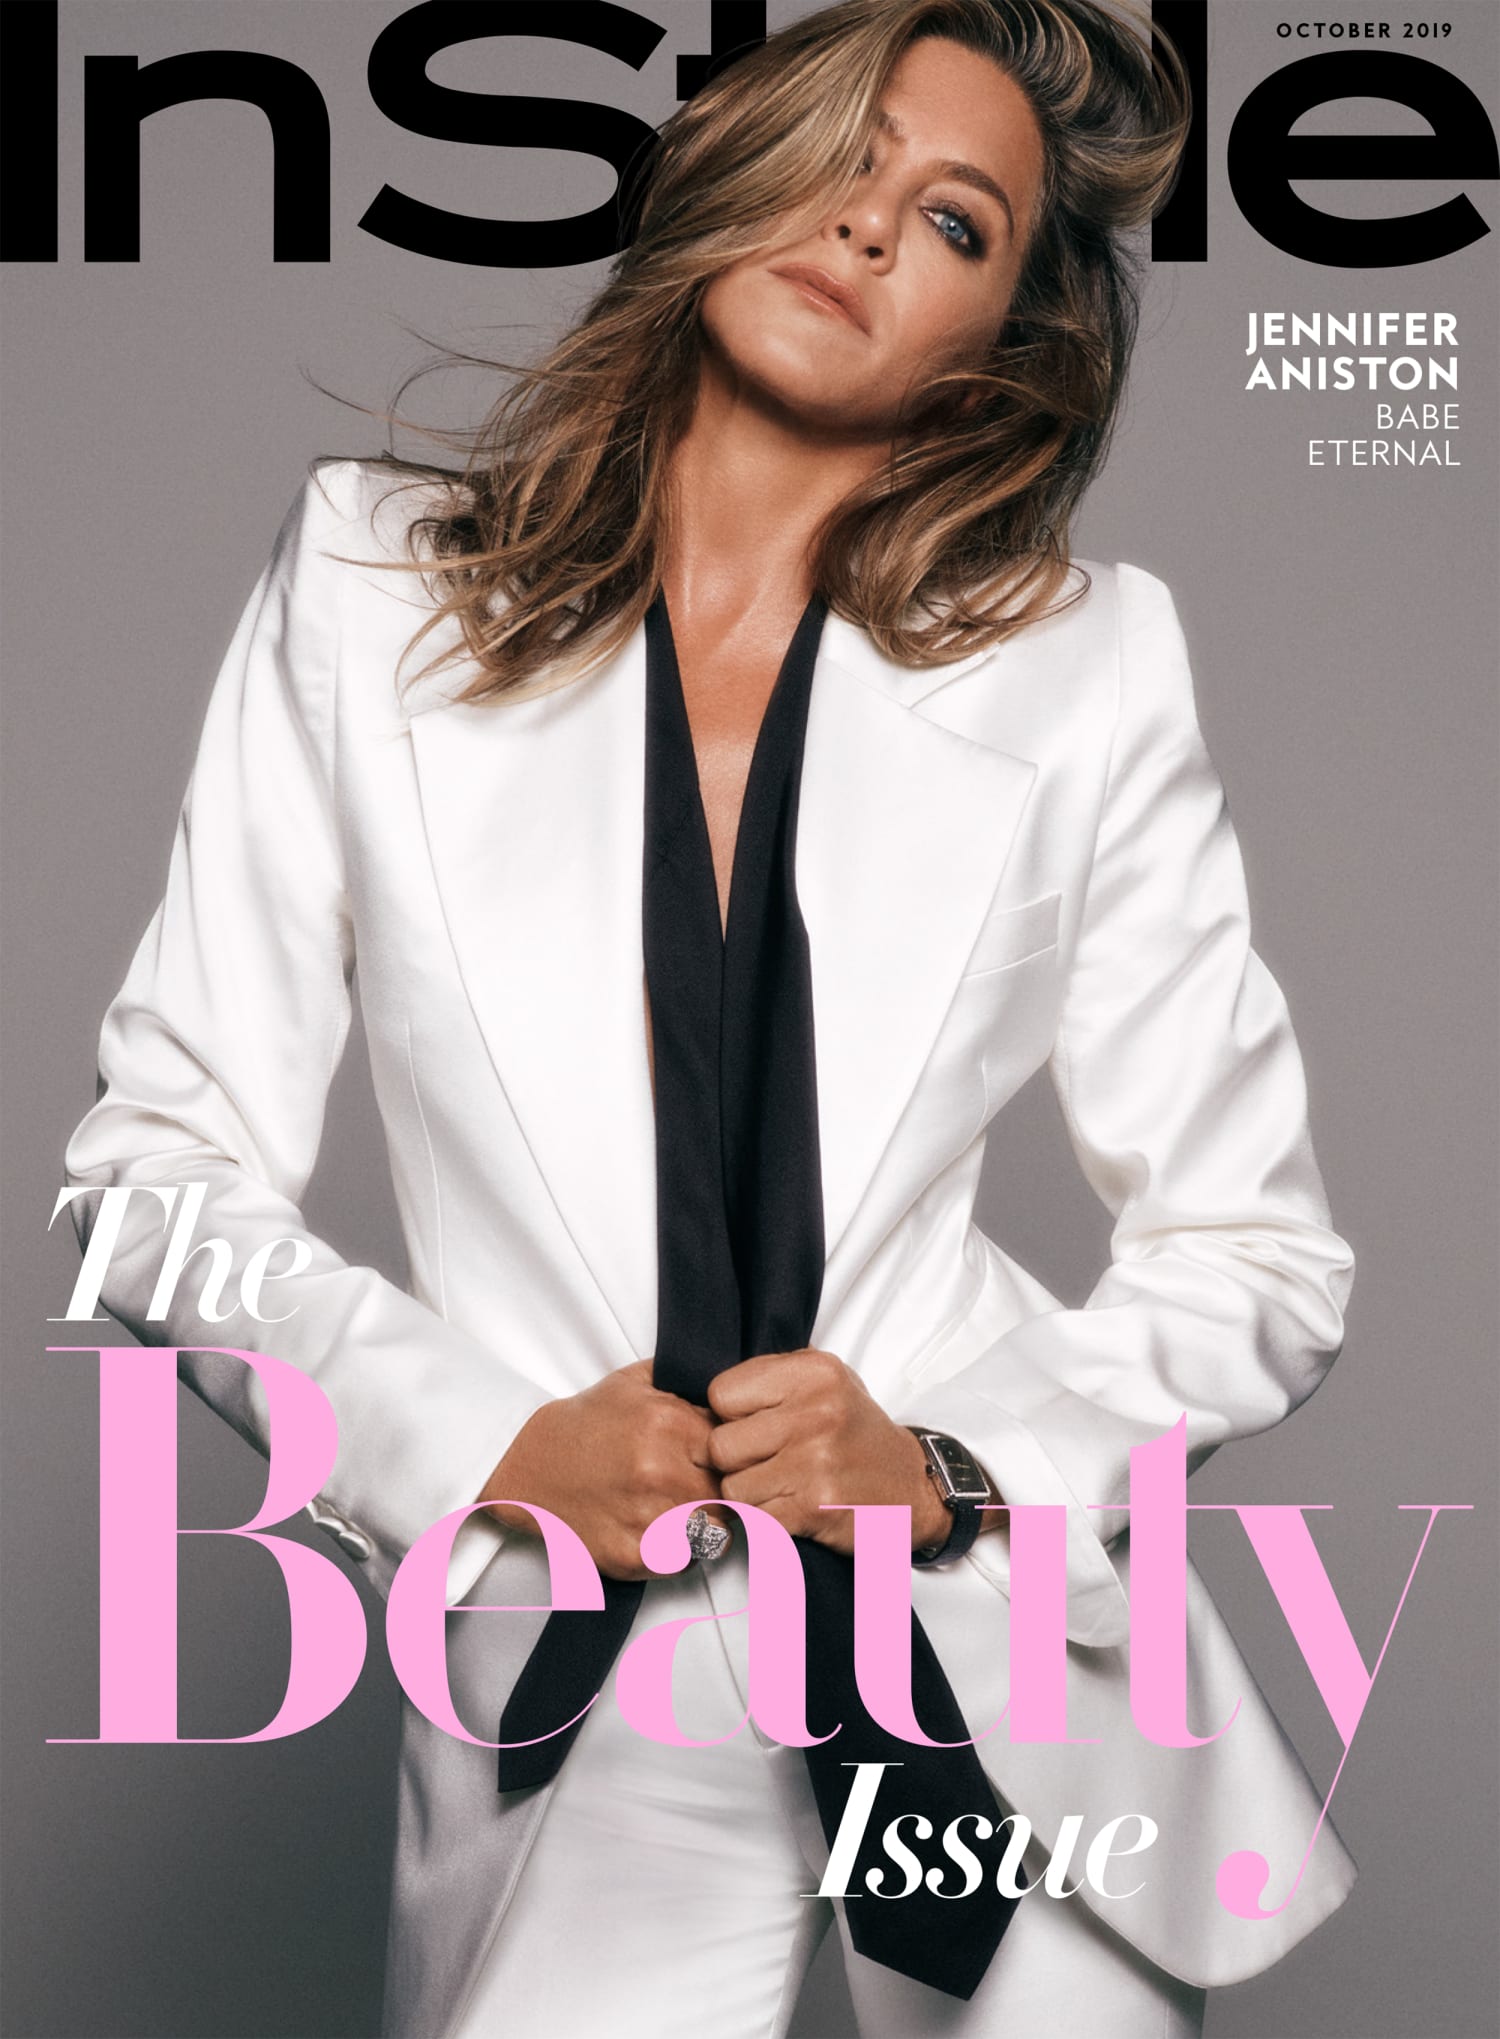 Jennifer Aniston: A Style and Fashion Star at 50